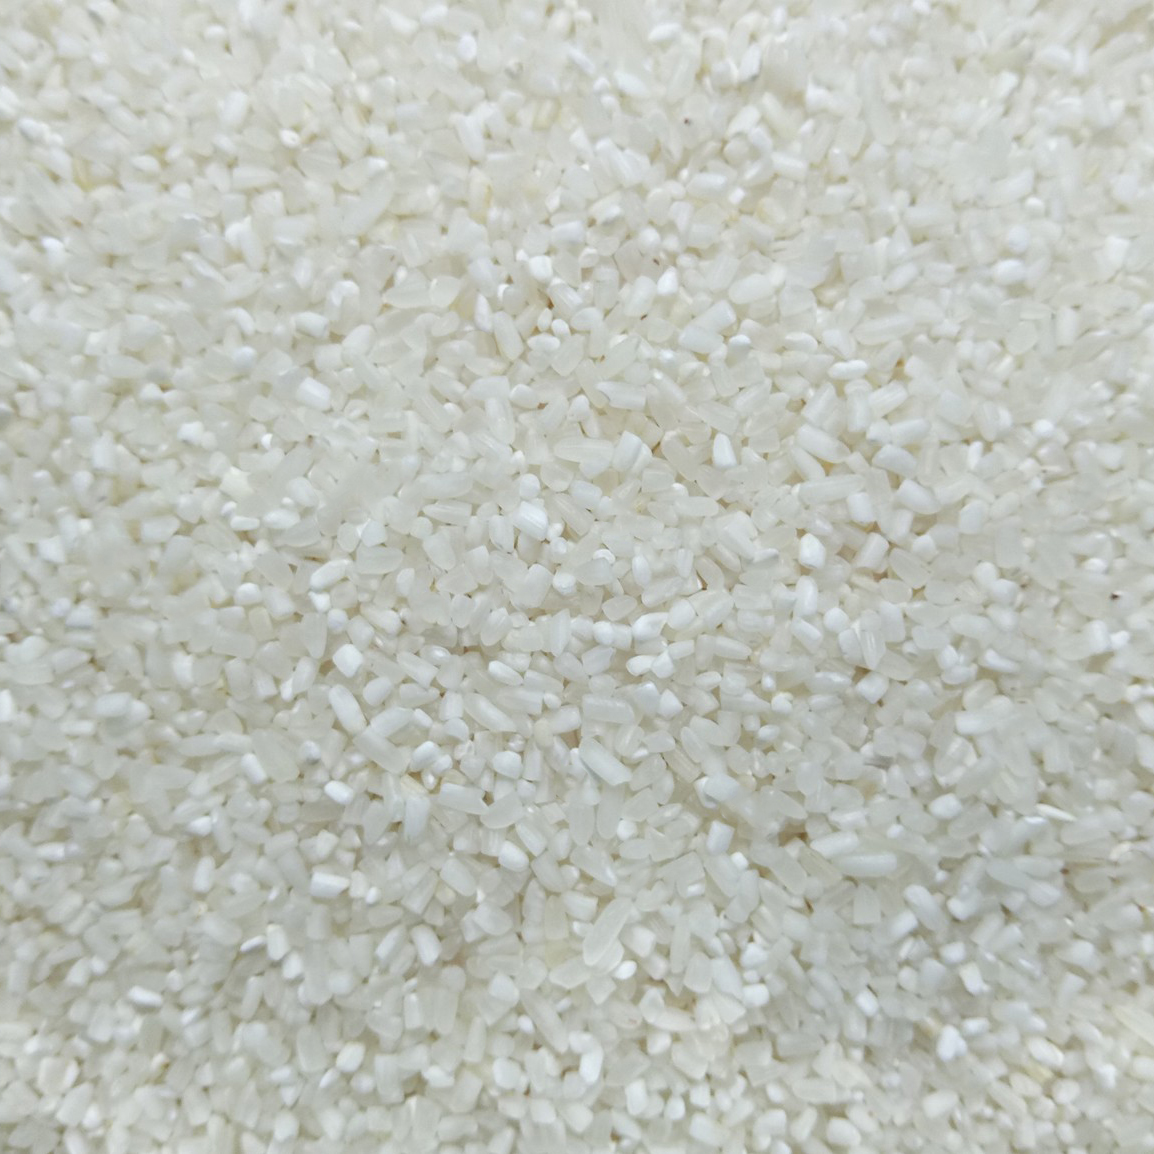 100% Broken Rice Whole Price Good Taste Rice For Food HALAL BRCGS HACCP ISO 22001 Vacuum Packed Vietnam Manufacturer 2